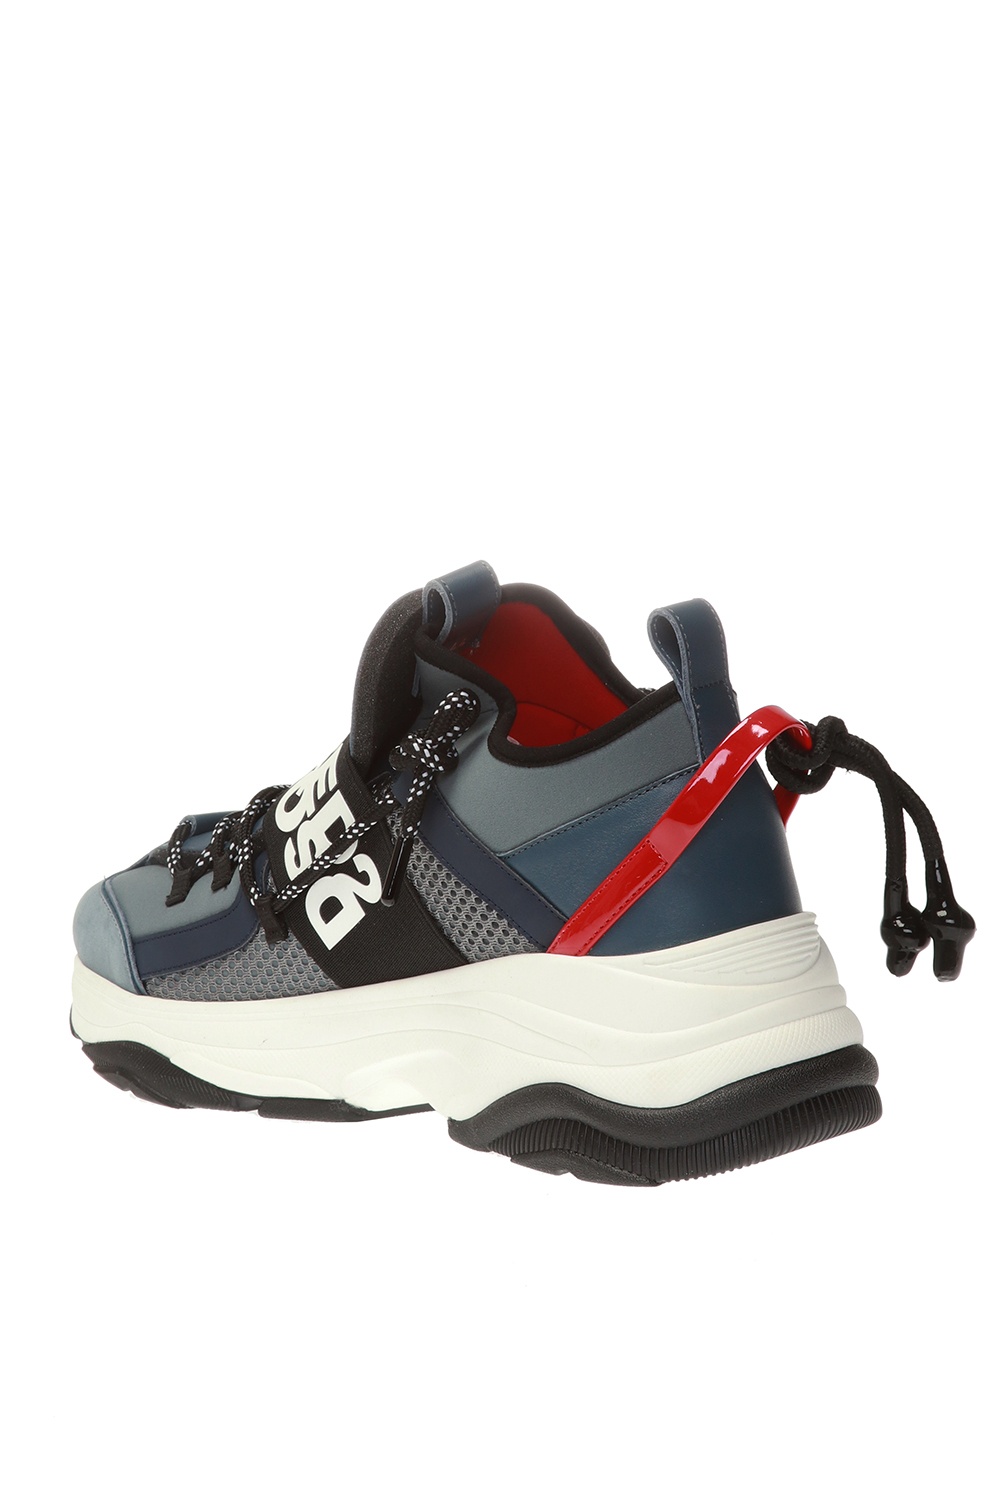 Dsquared2 'D-Bumpy One' sneakers | Men's Shoes | Vitkac